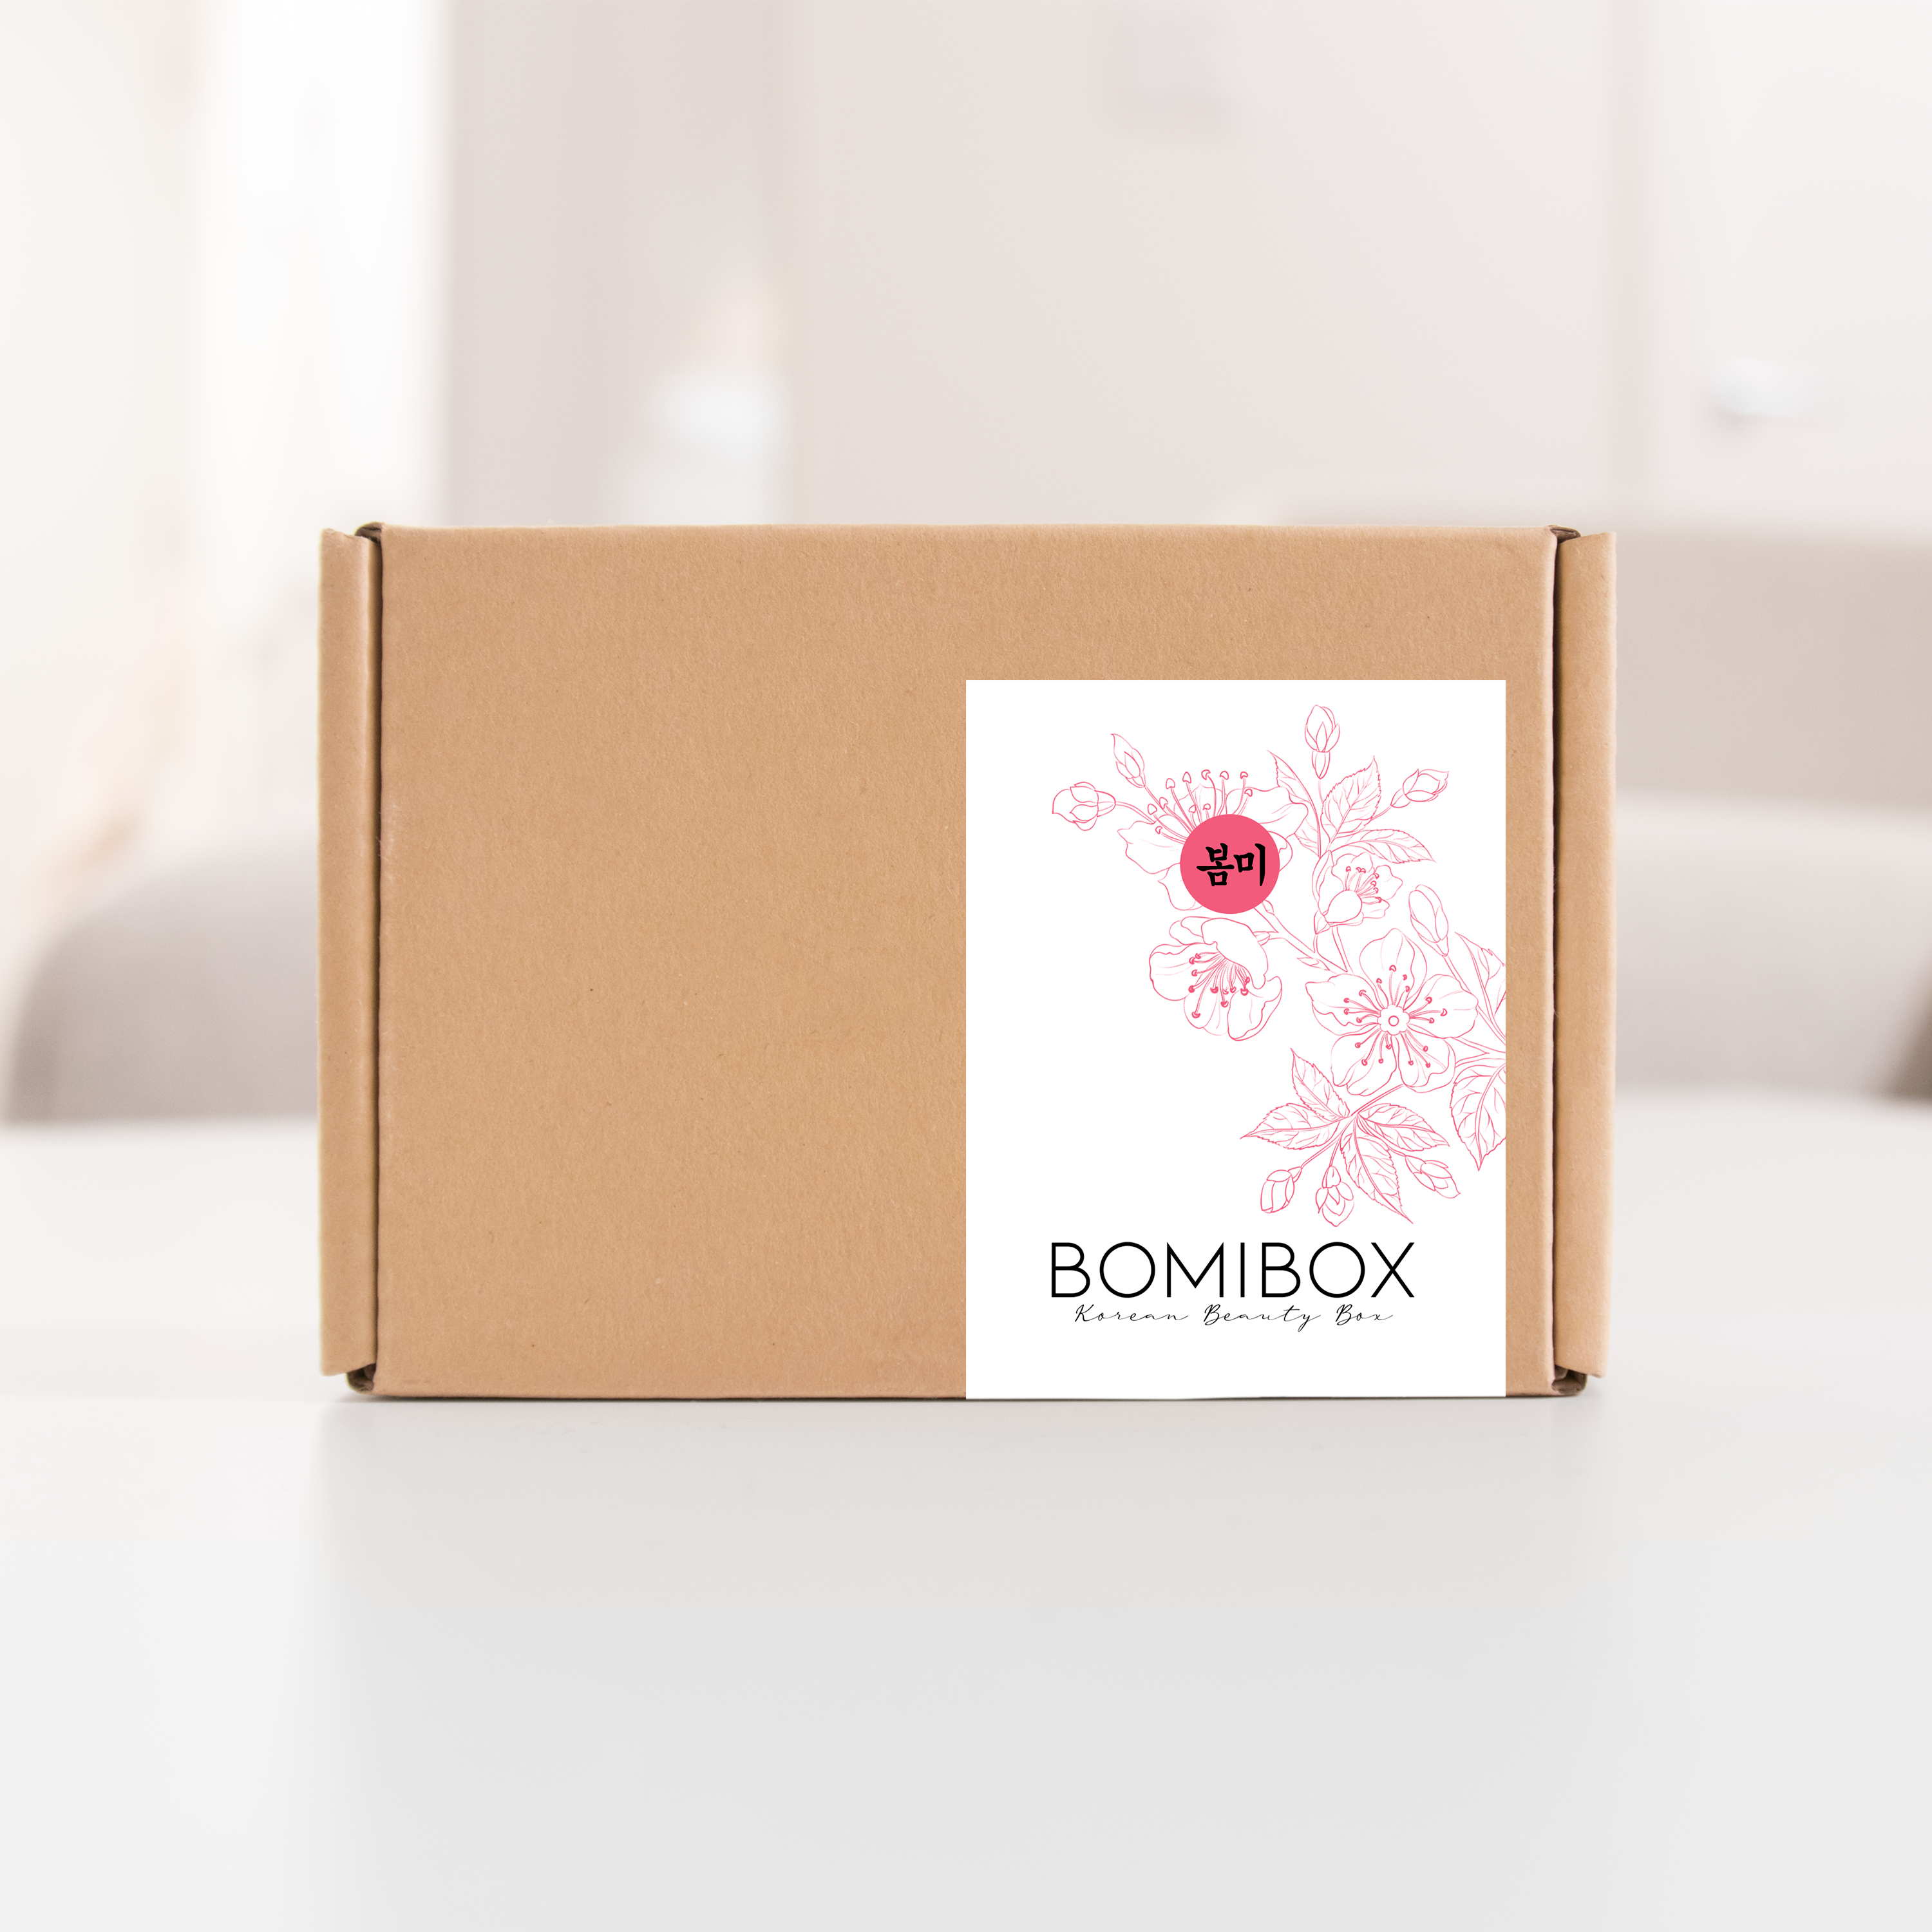 Past Boxes-Bomibox Love #1 - Korean Beauty Box Monthly Korean Skincare Subscription